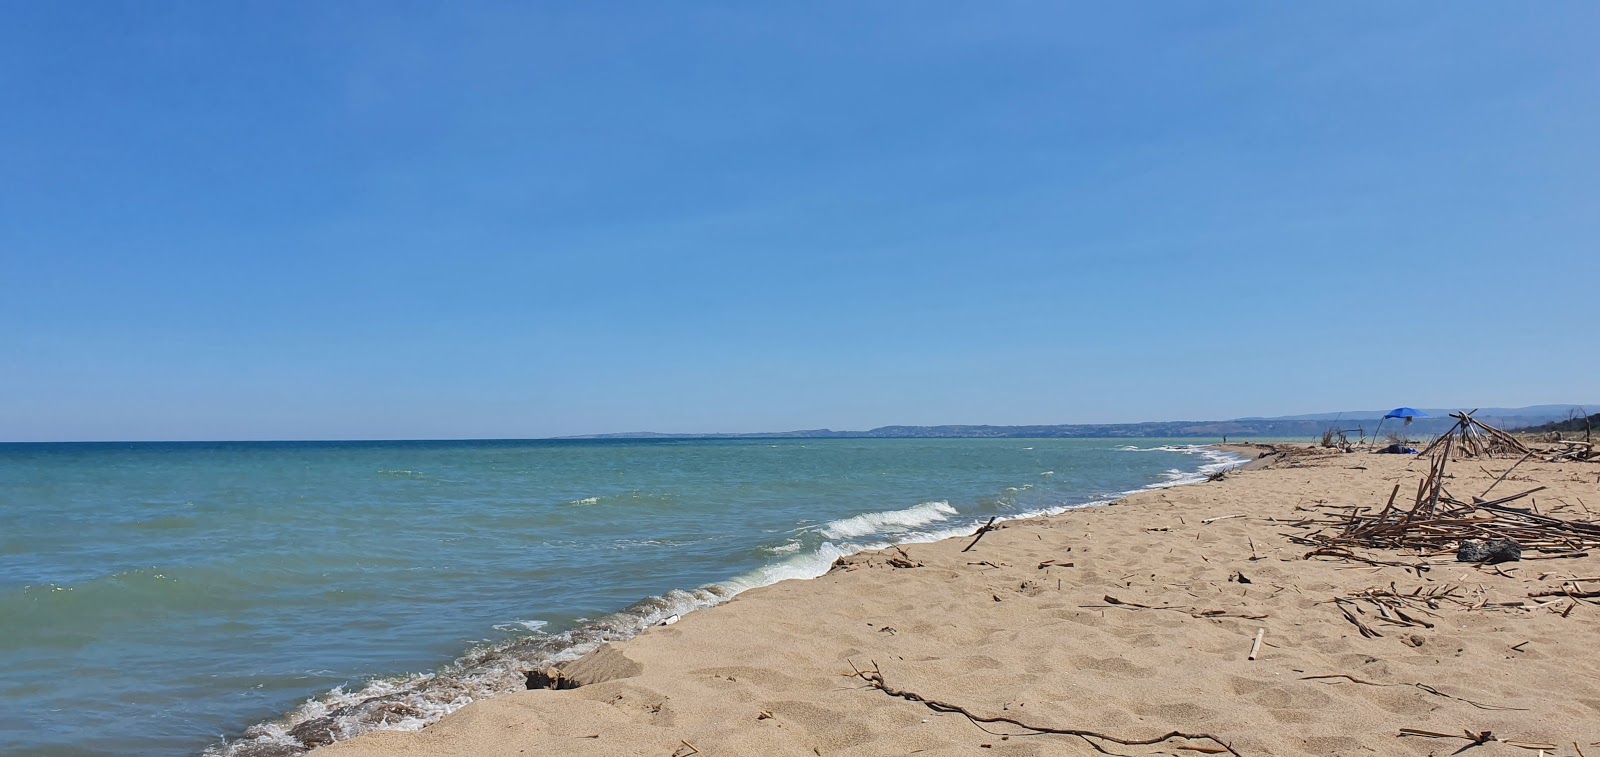 Fotografie cu Primosole beach cu nivelul de curățenie in medie